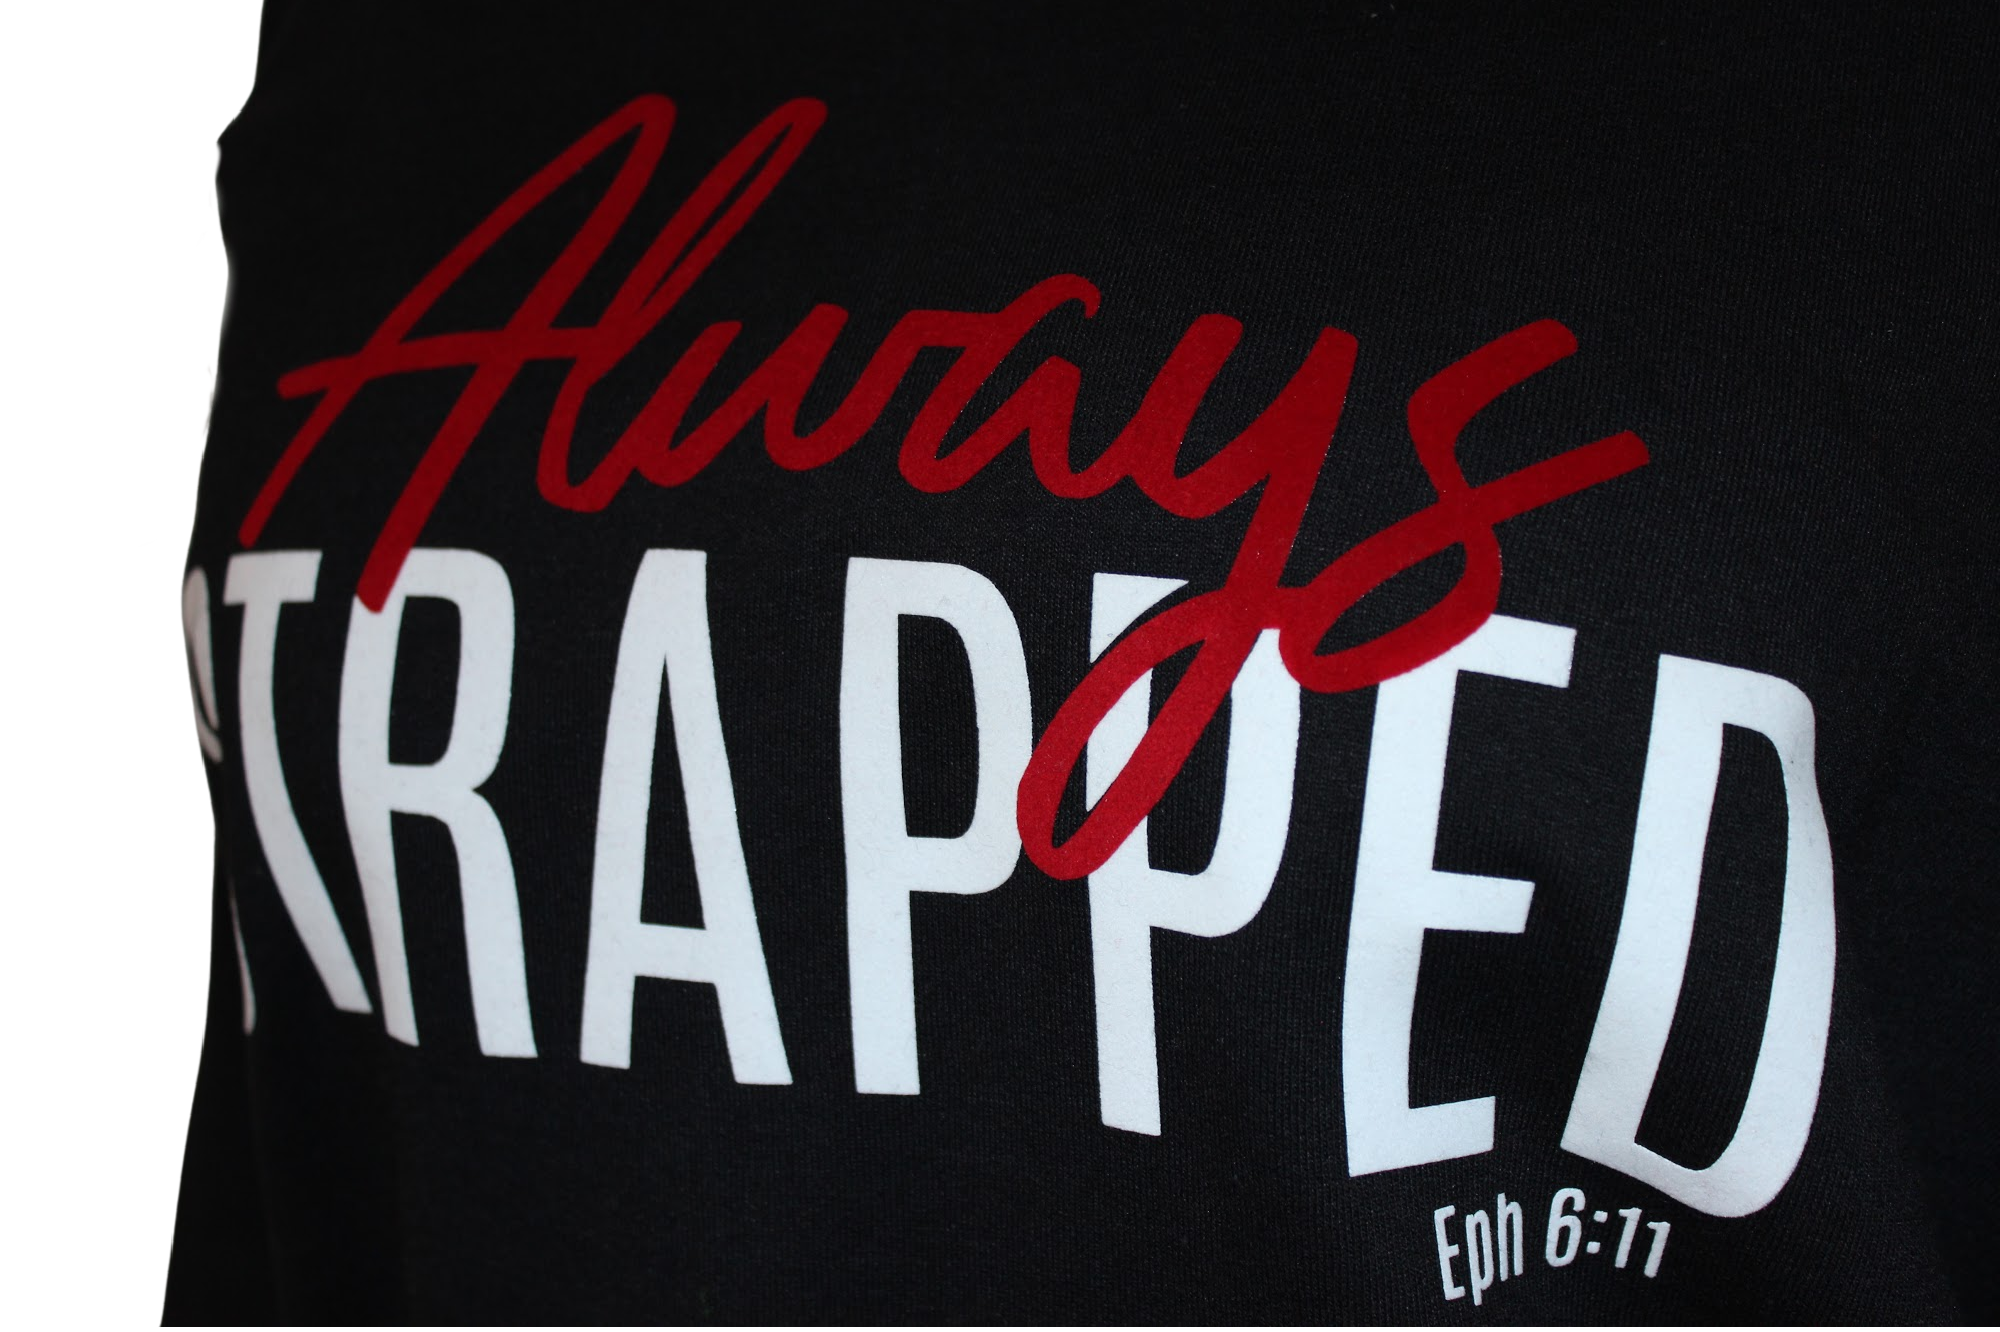 "ALWAYS STRAPPED" Sweatshirt - Black